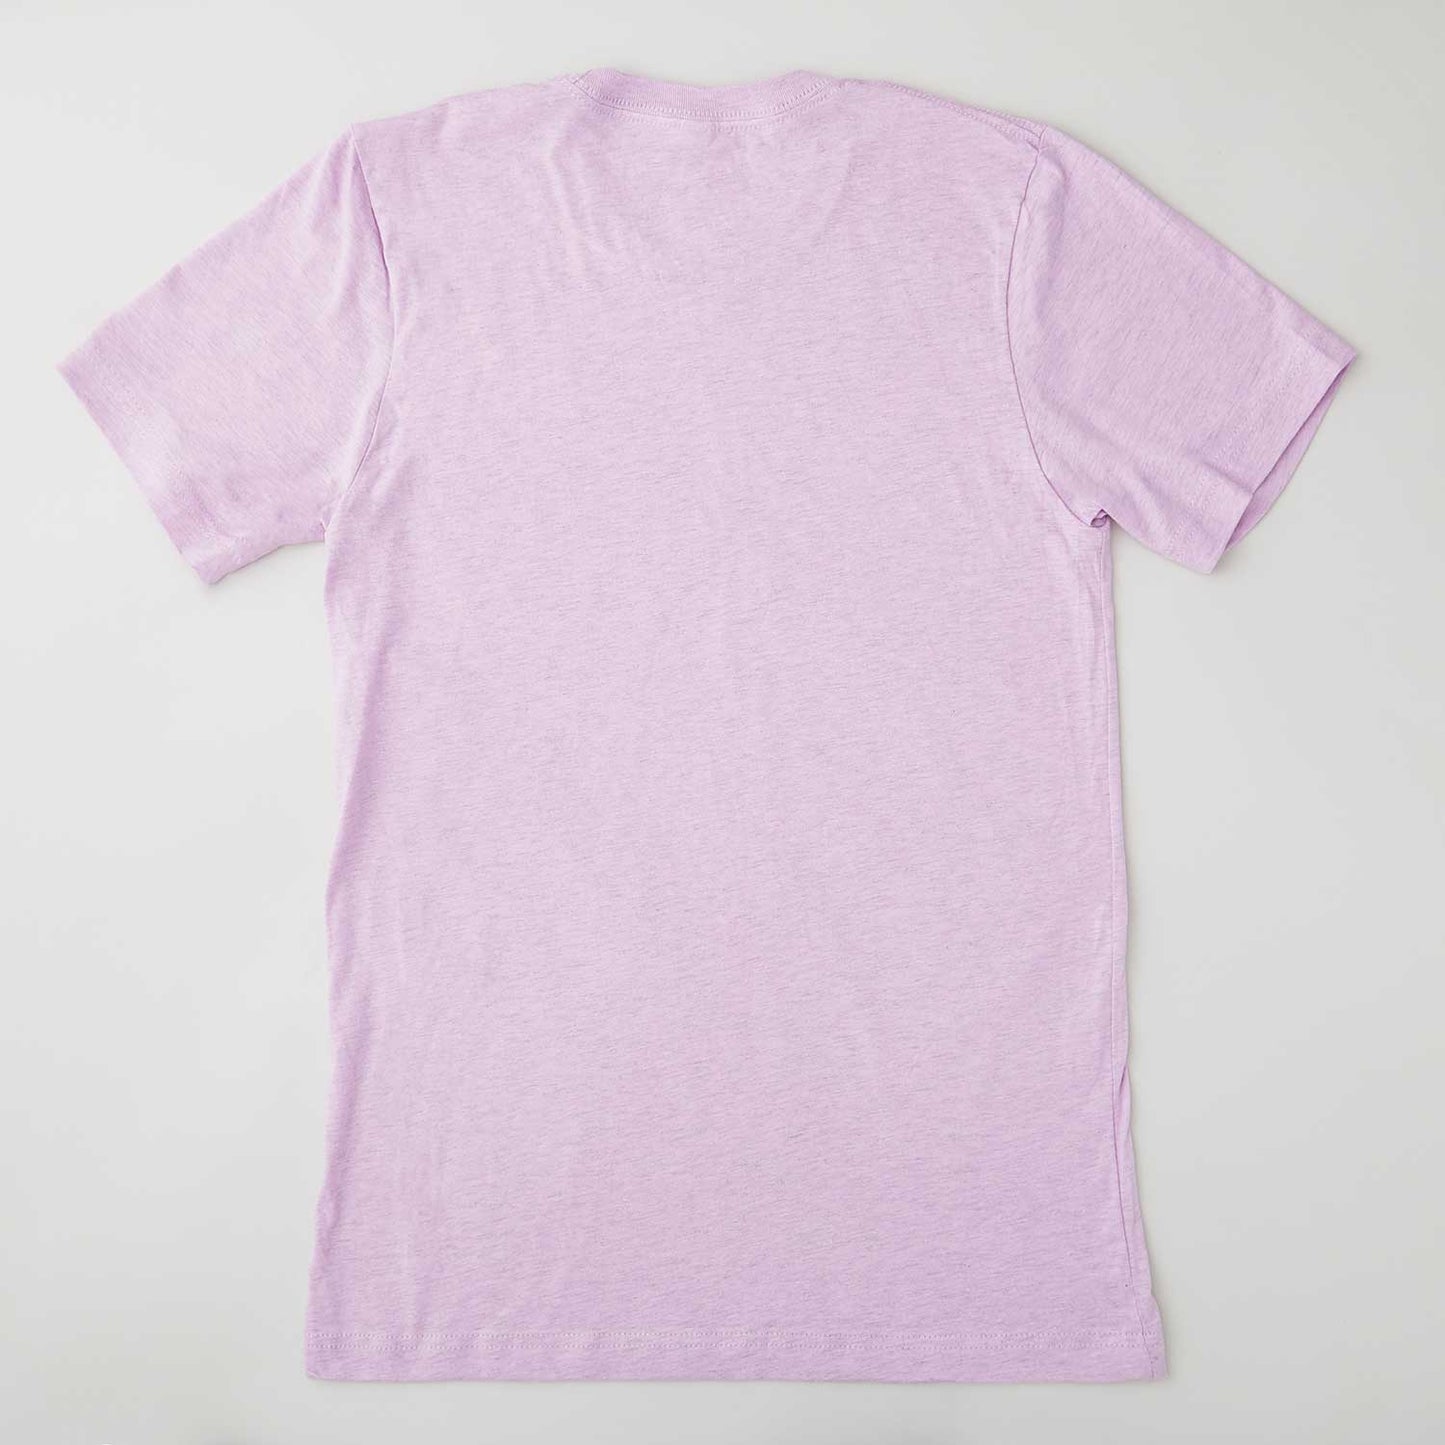 Quiltmaker T-shirt - Heather Prism Lilac - L Alternative View #1